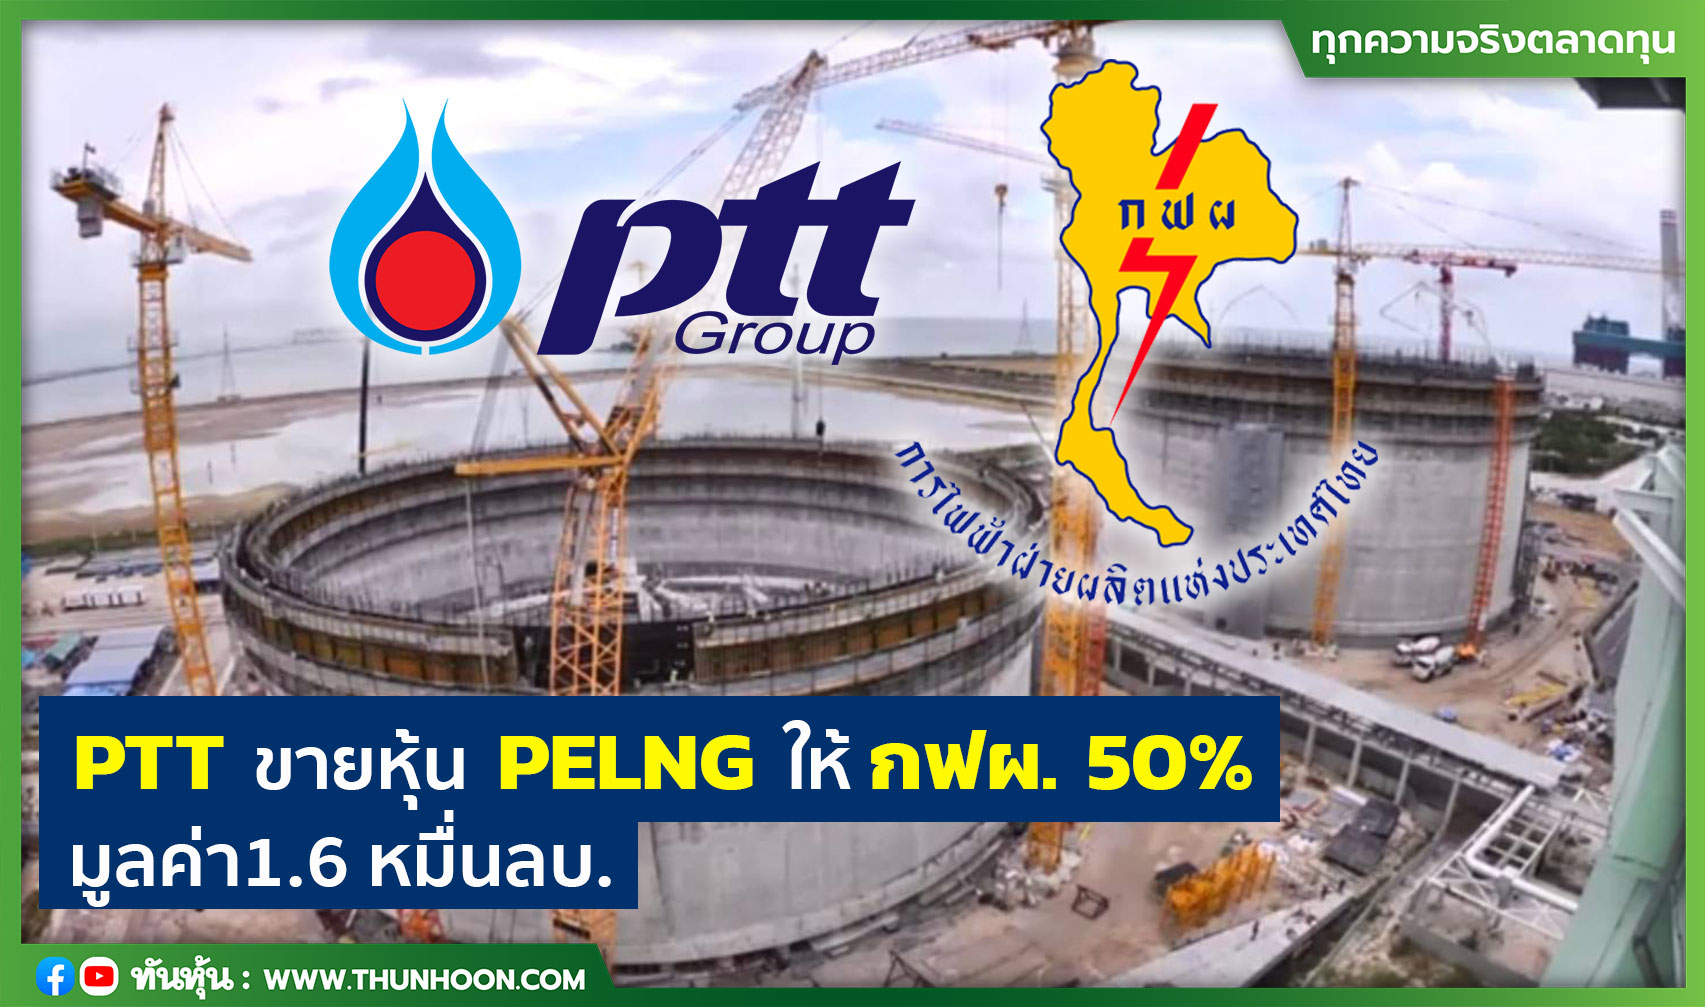 PTT ขายหุ้น PELNG ให้กฟผ.50% มูลค่า1.6 หมื่นลบ.